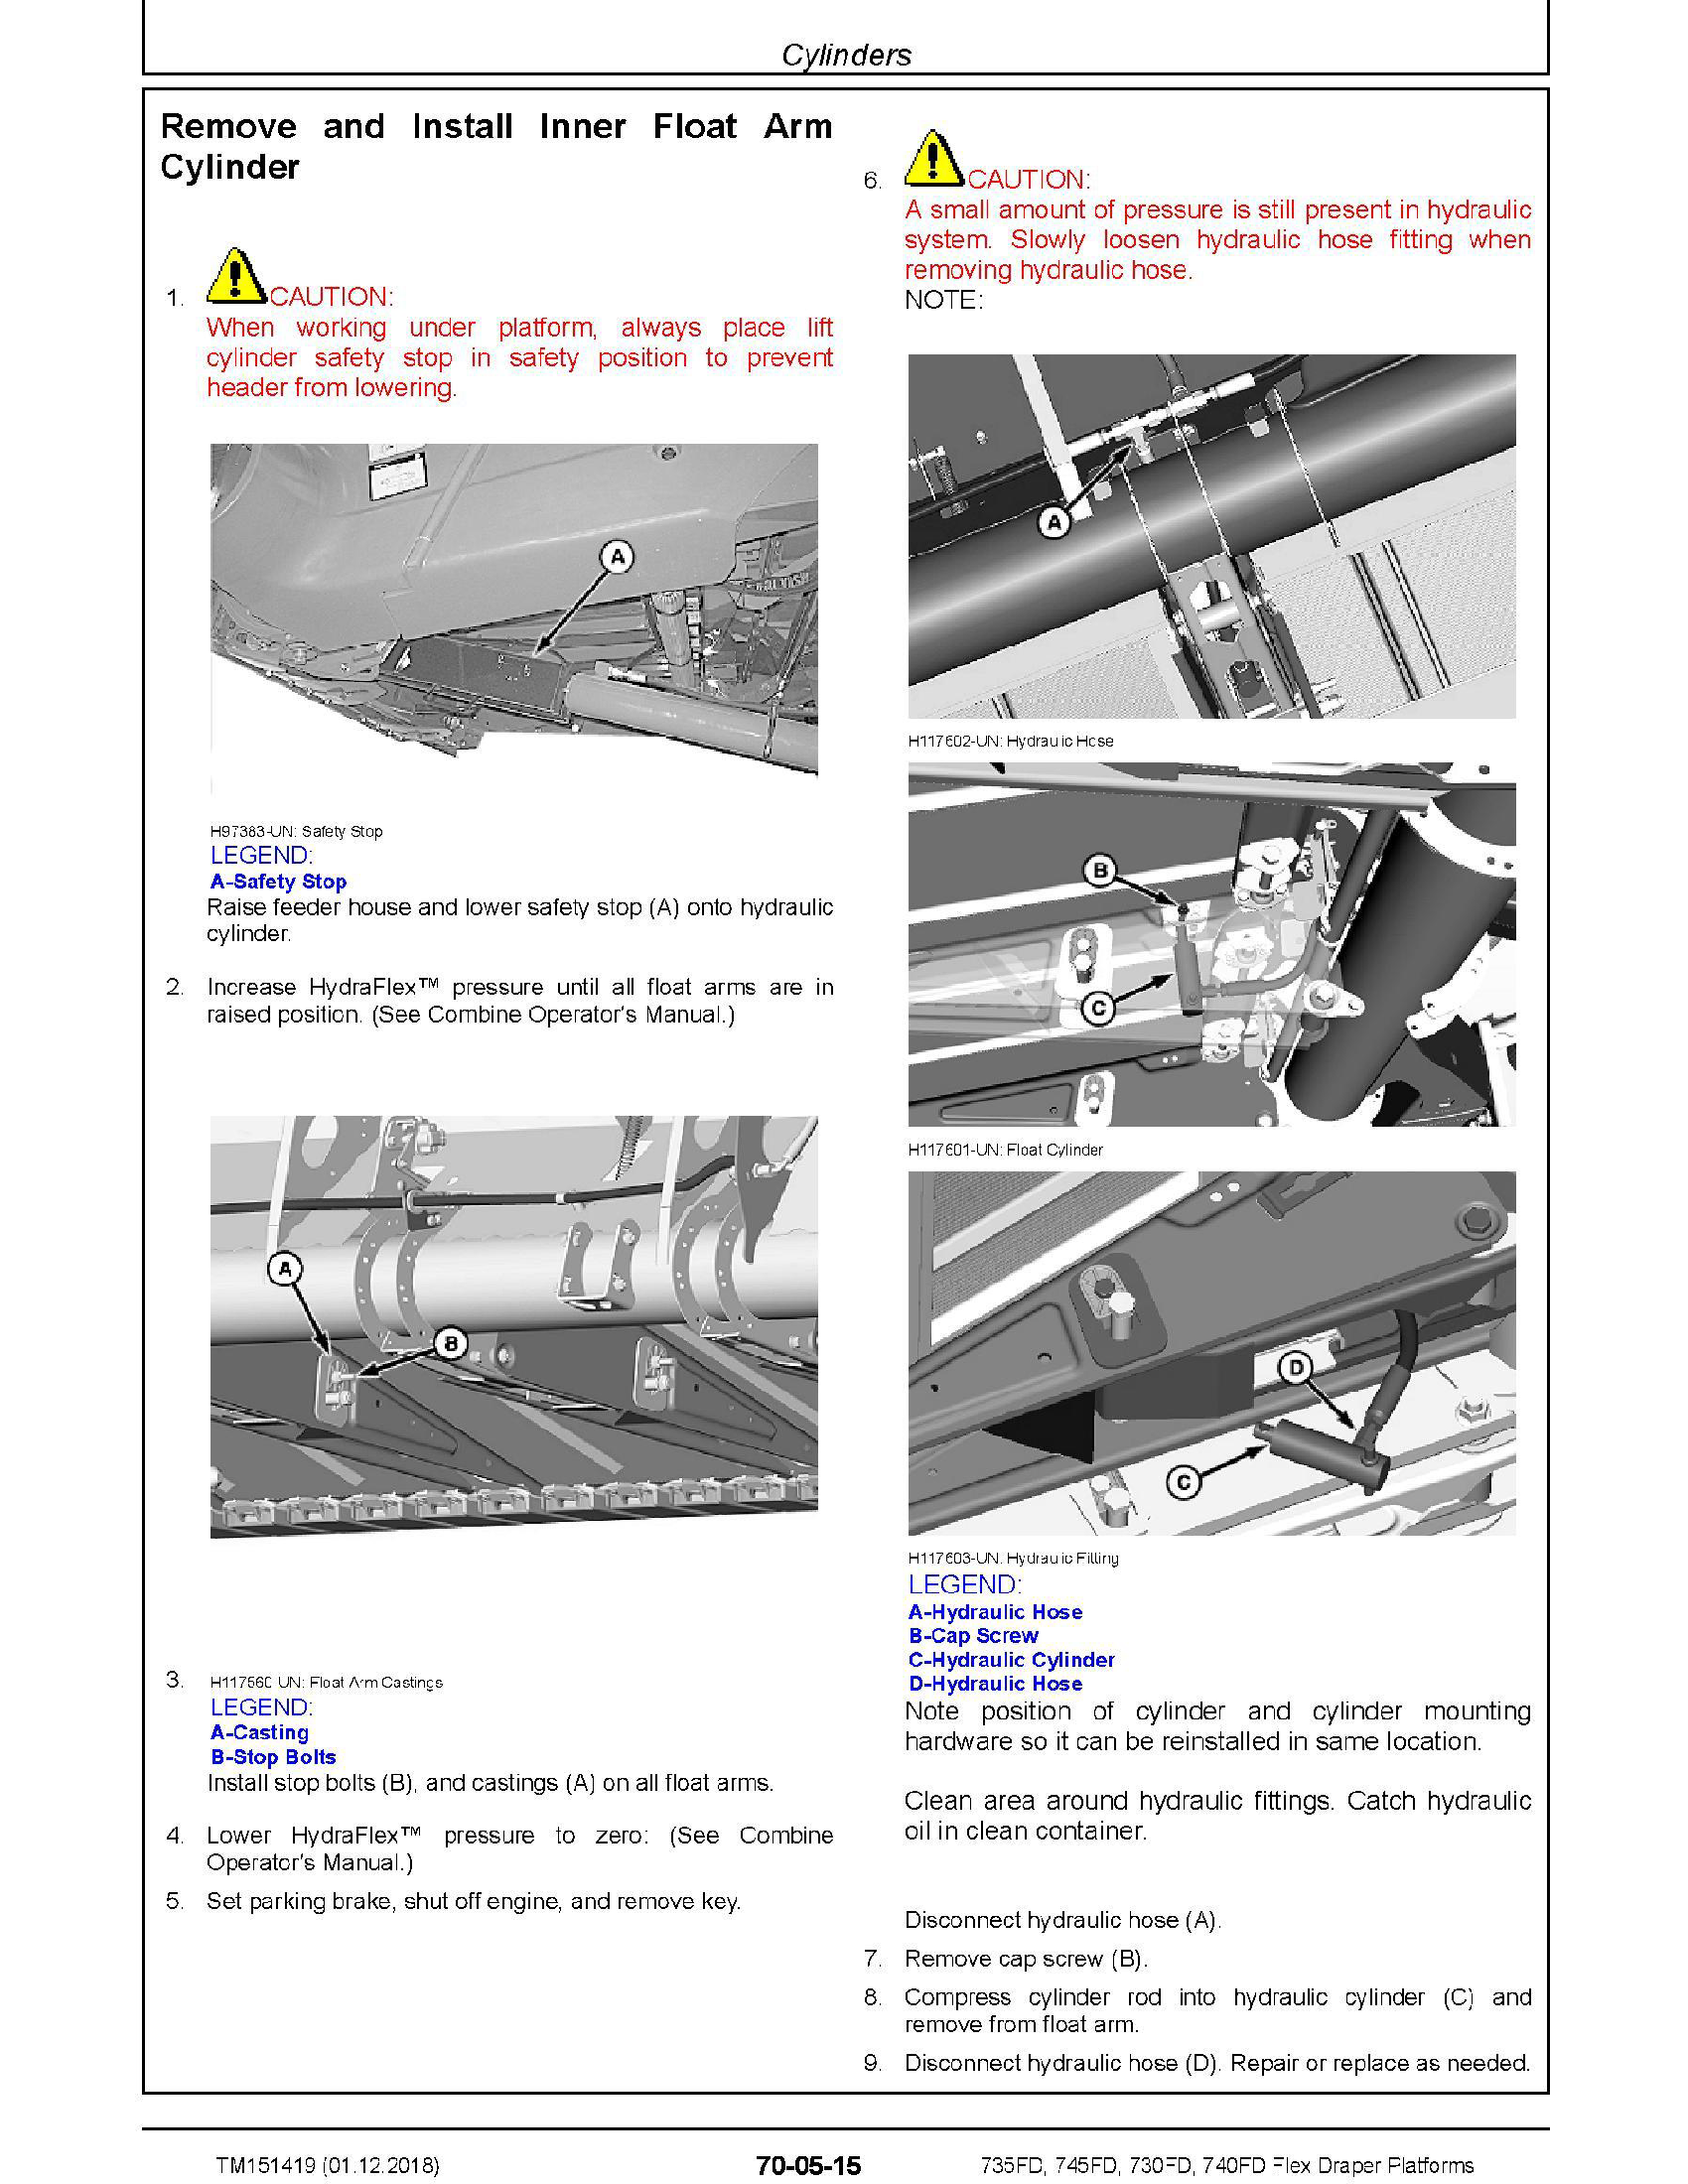 John Deere 740FD manual pdf